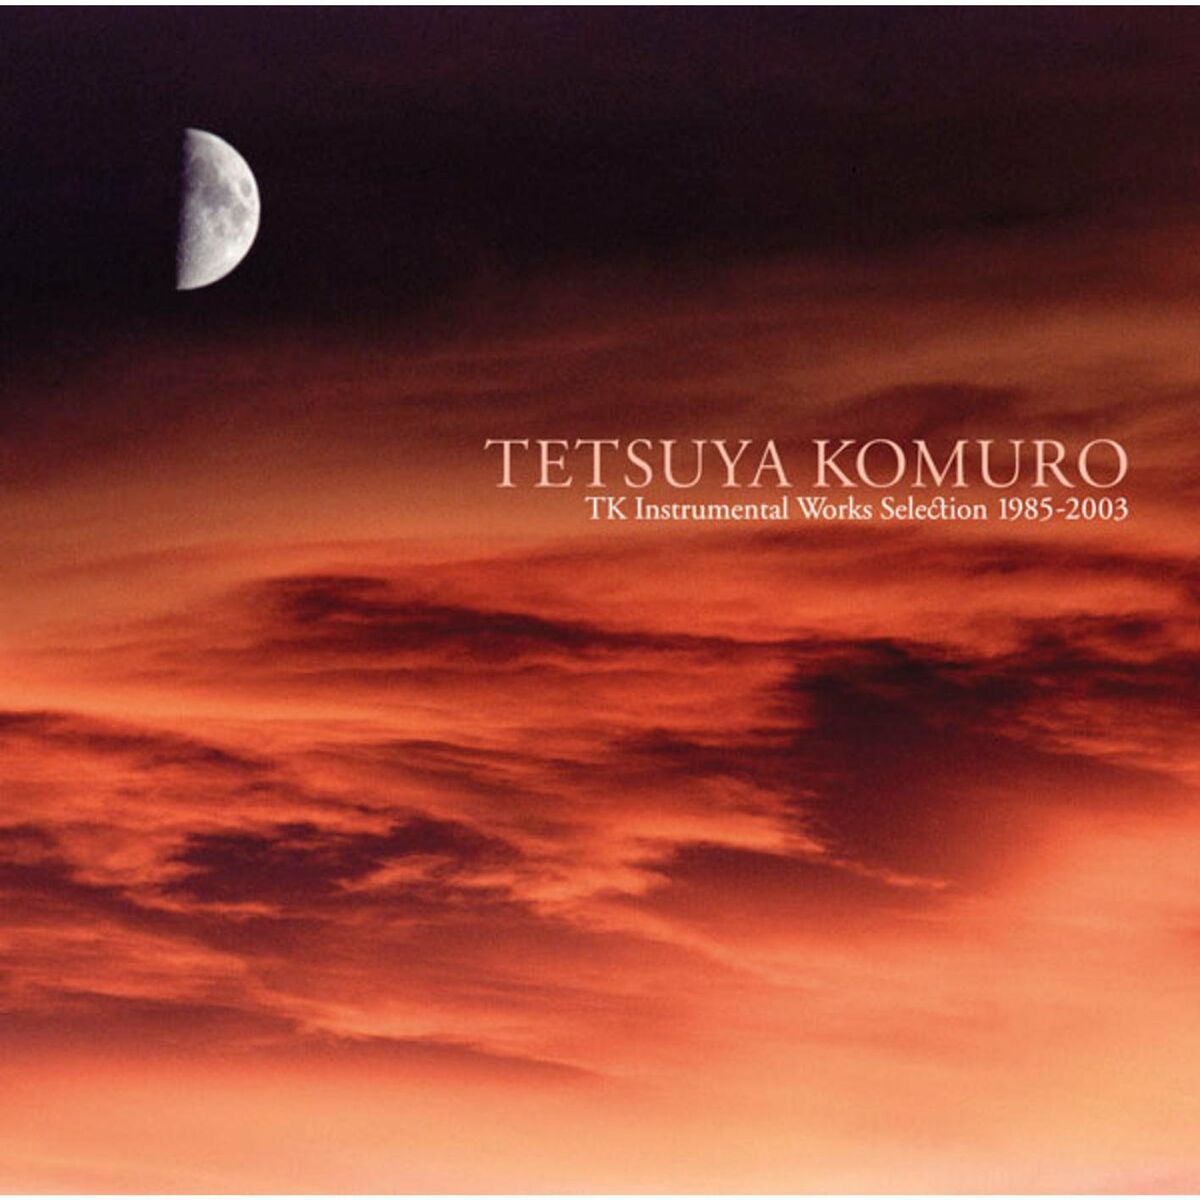 Tetsuya Komuro: albums, songs, playlists | Listen on Deezer